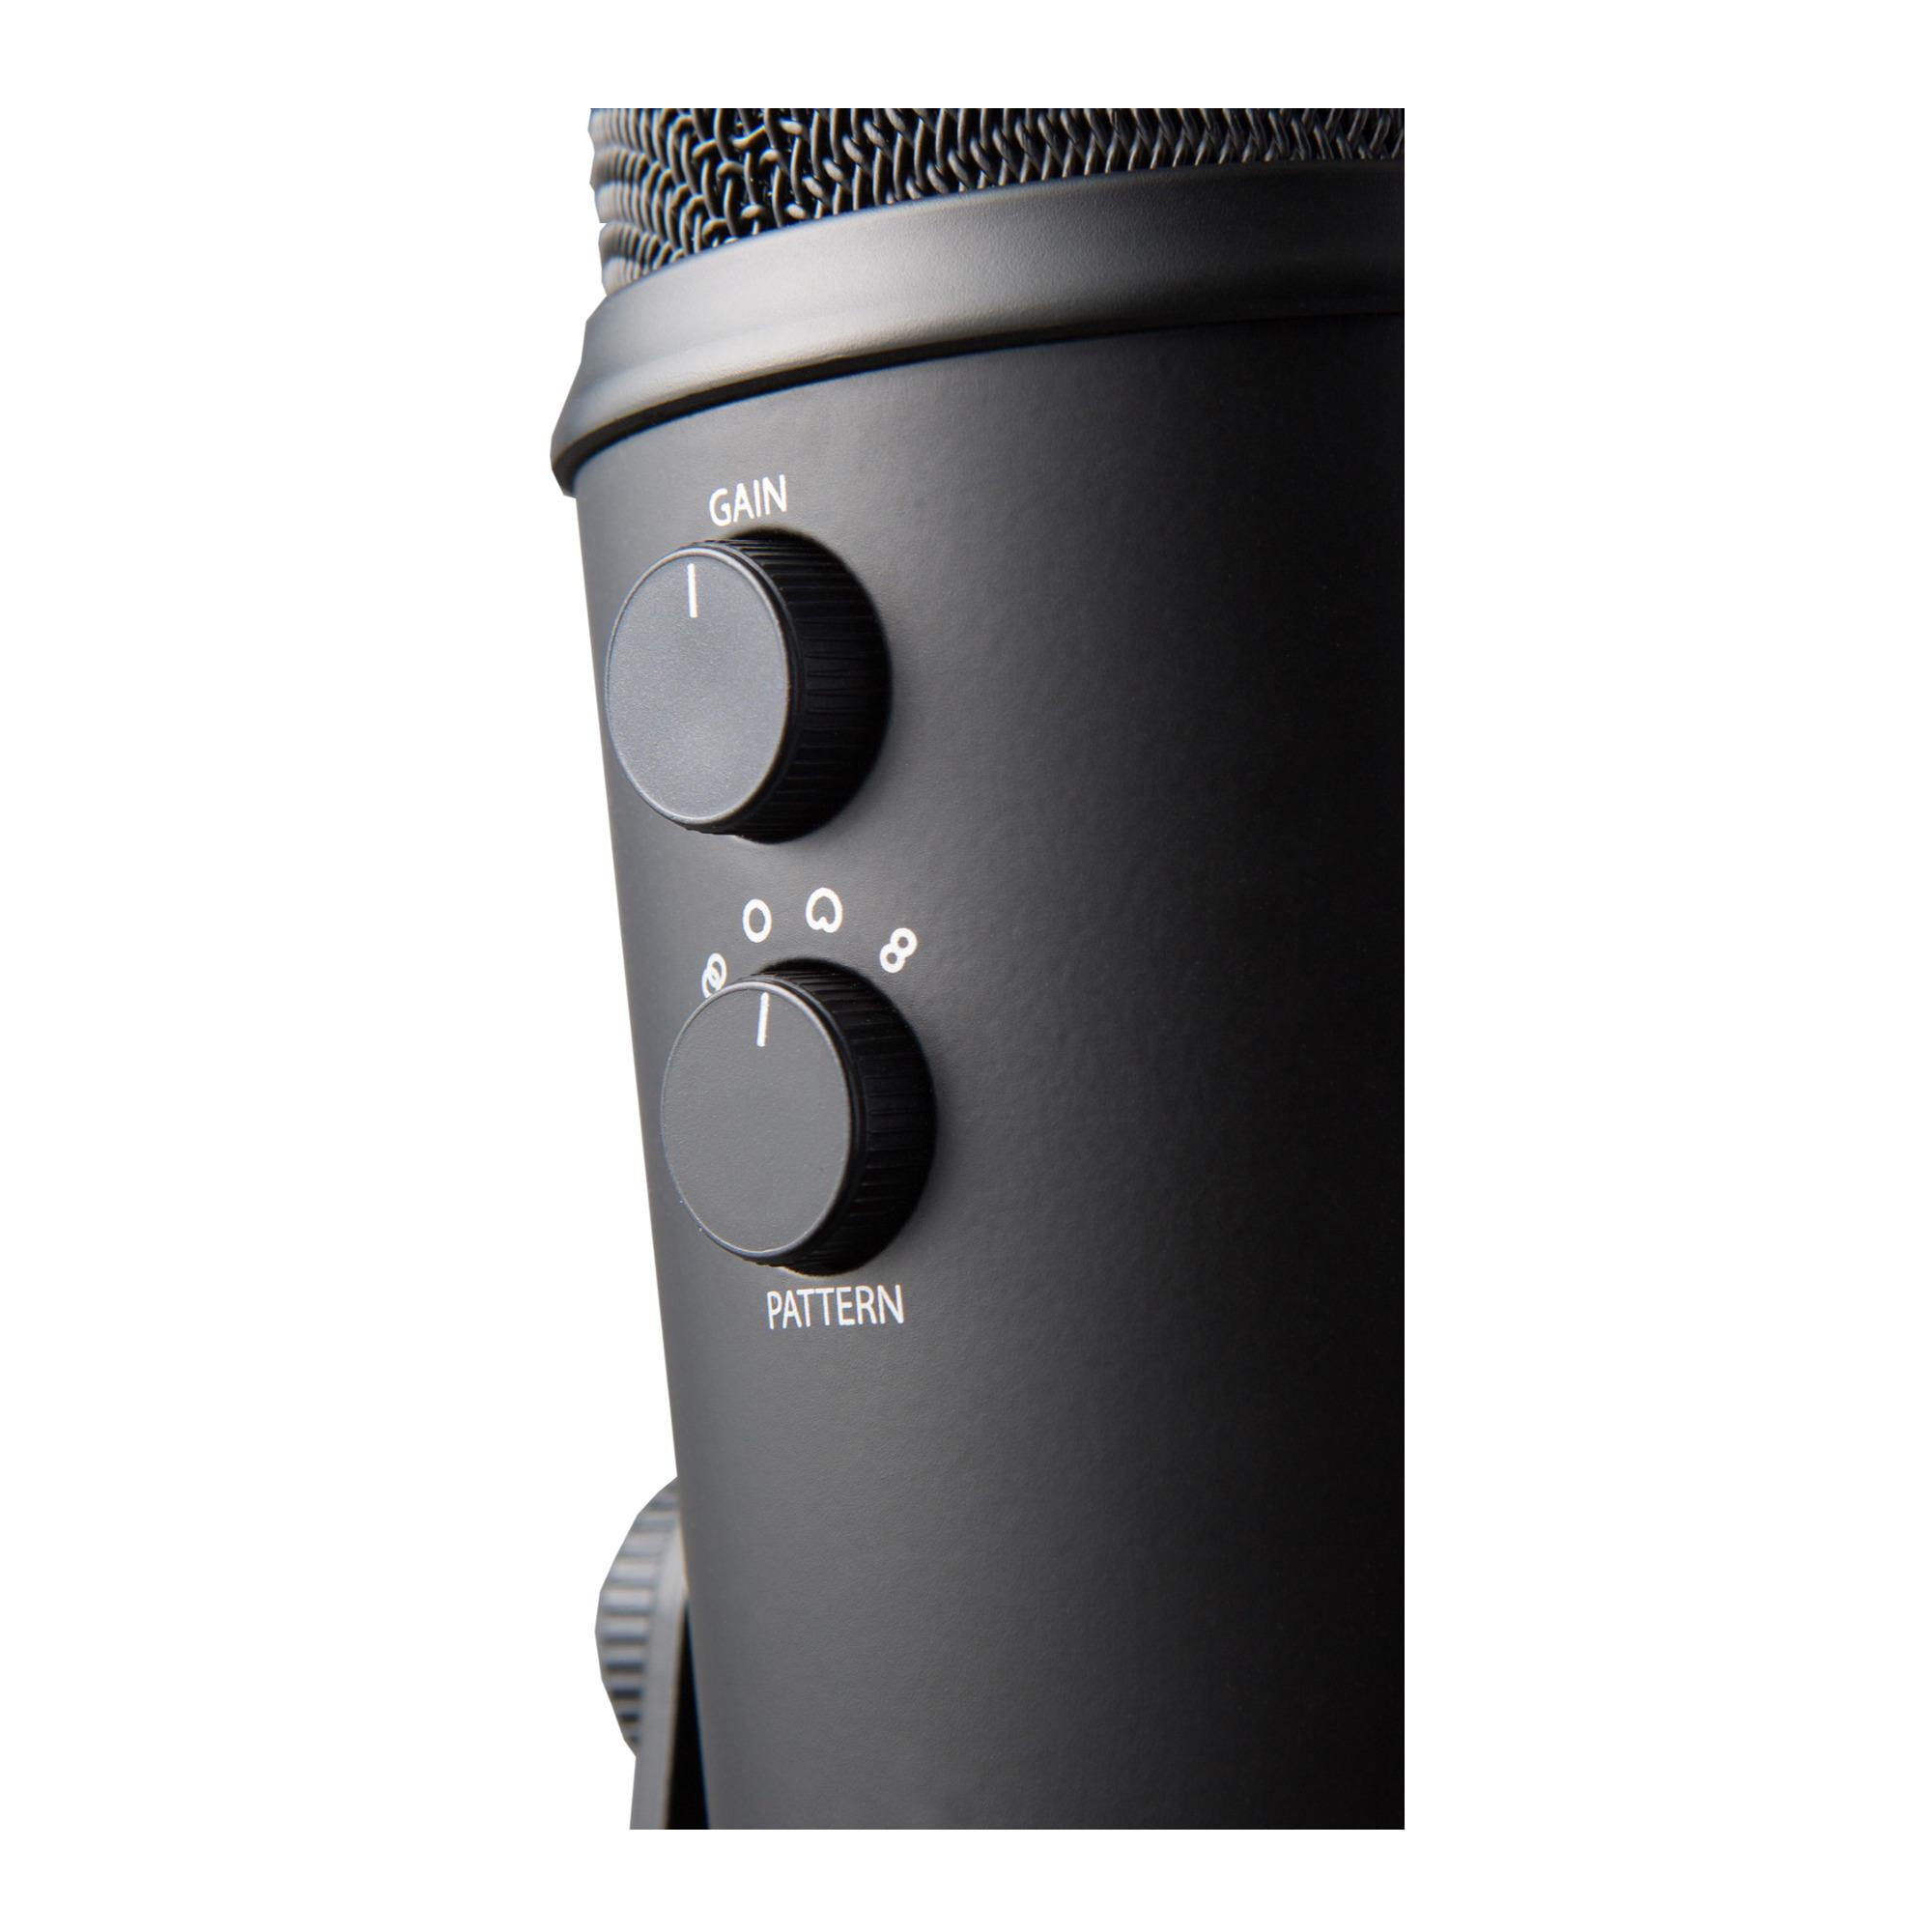 Blue Microphones Pro Streamer Pack with Blue Yeti USB Microphone & Logitech  C922 Pro HD Webcam 988-000432 - Best Buy